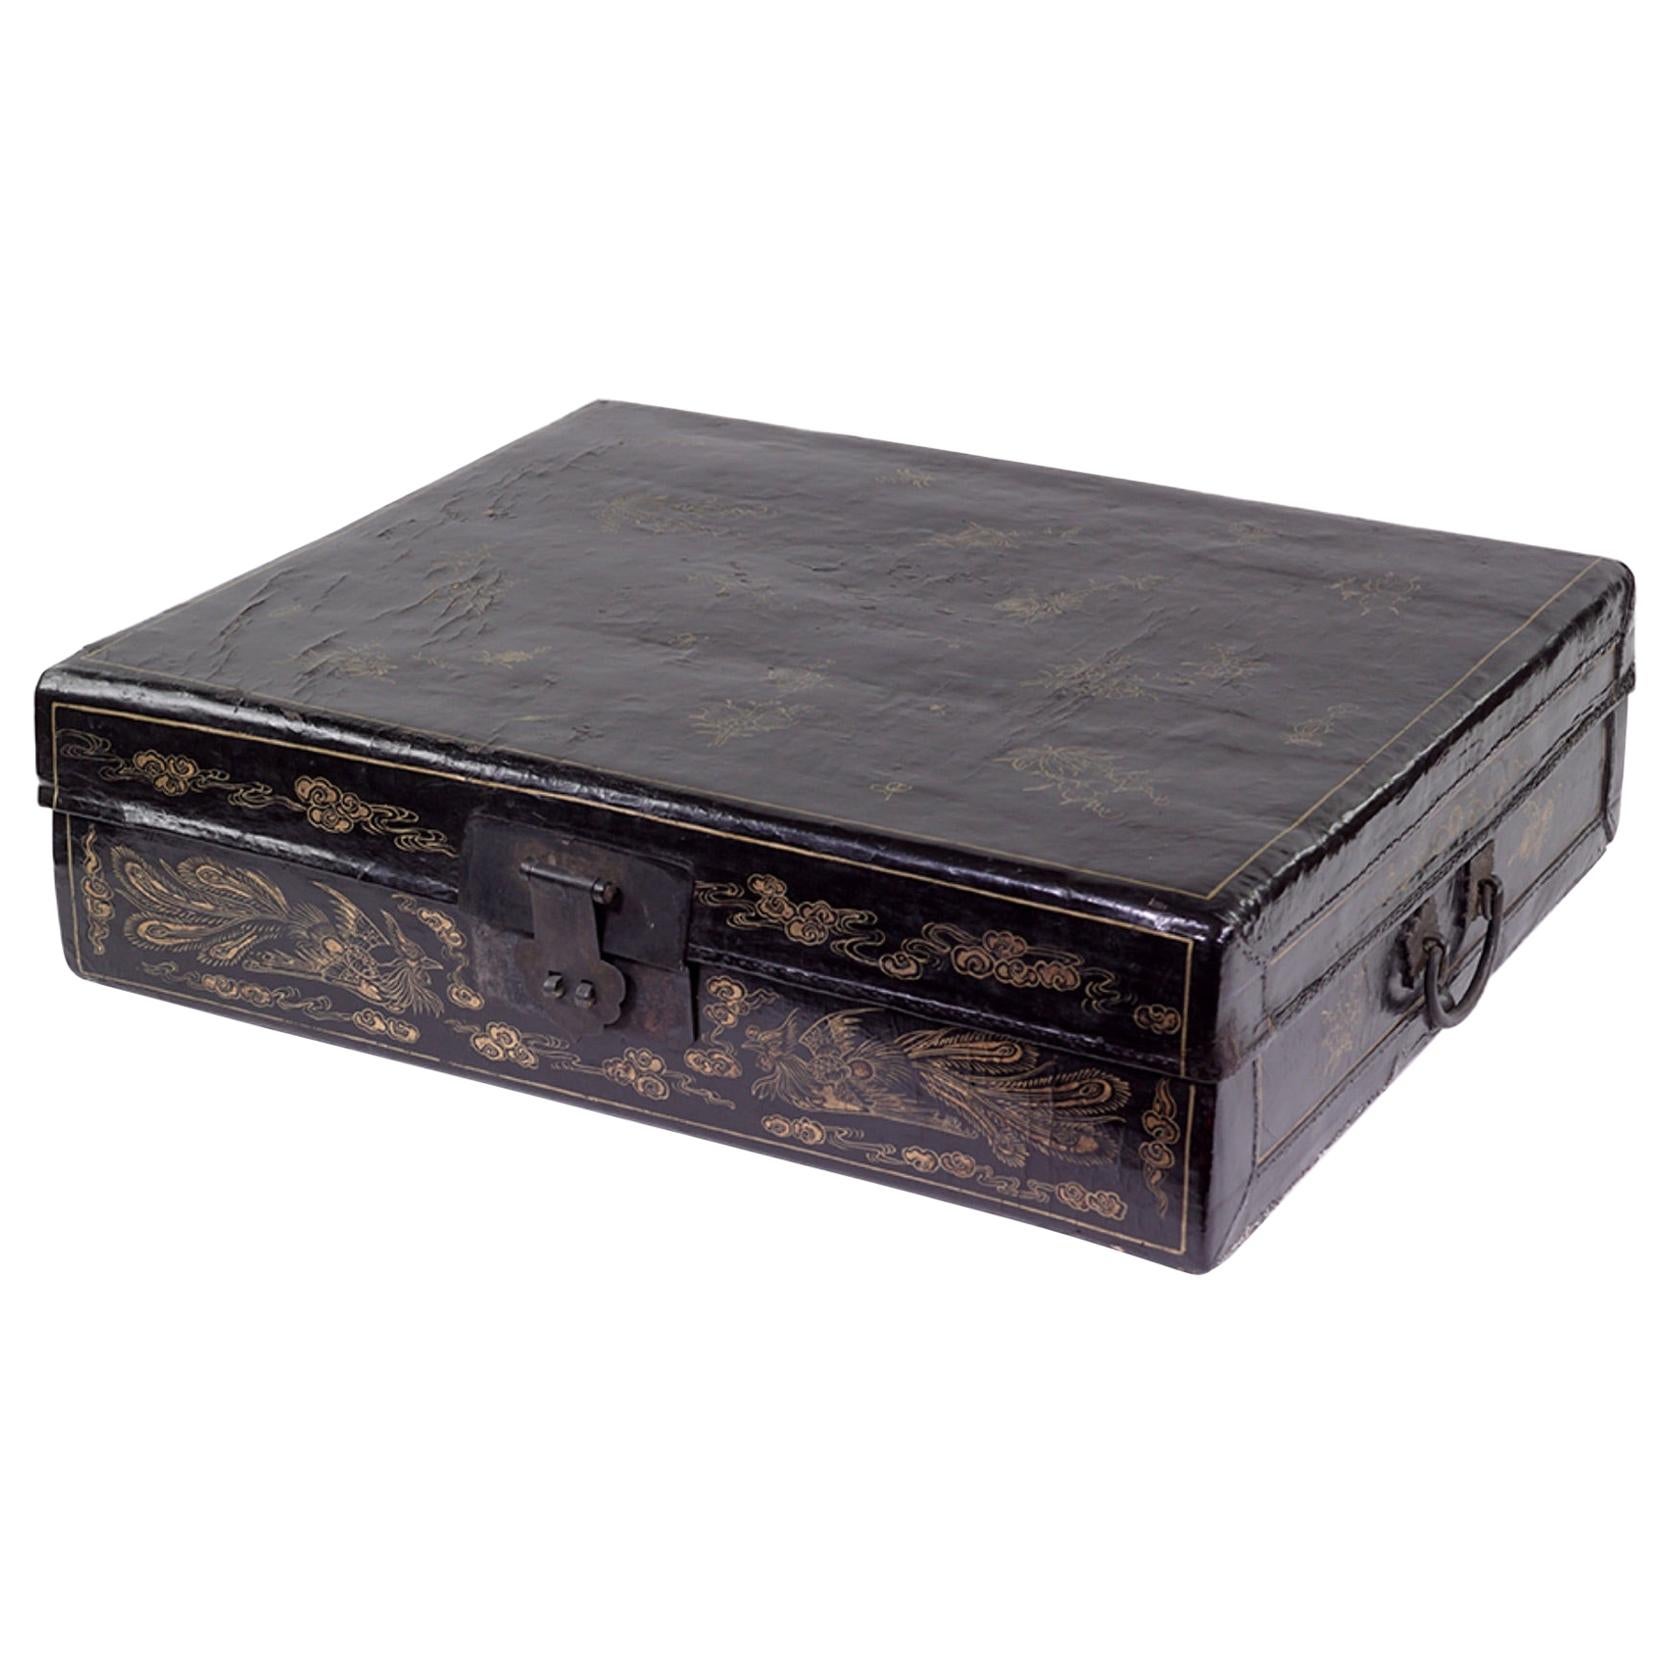 19th Century Chinese Box, Black Lacquered Rectangular Double Handled Box